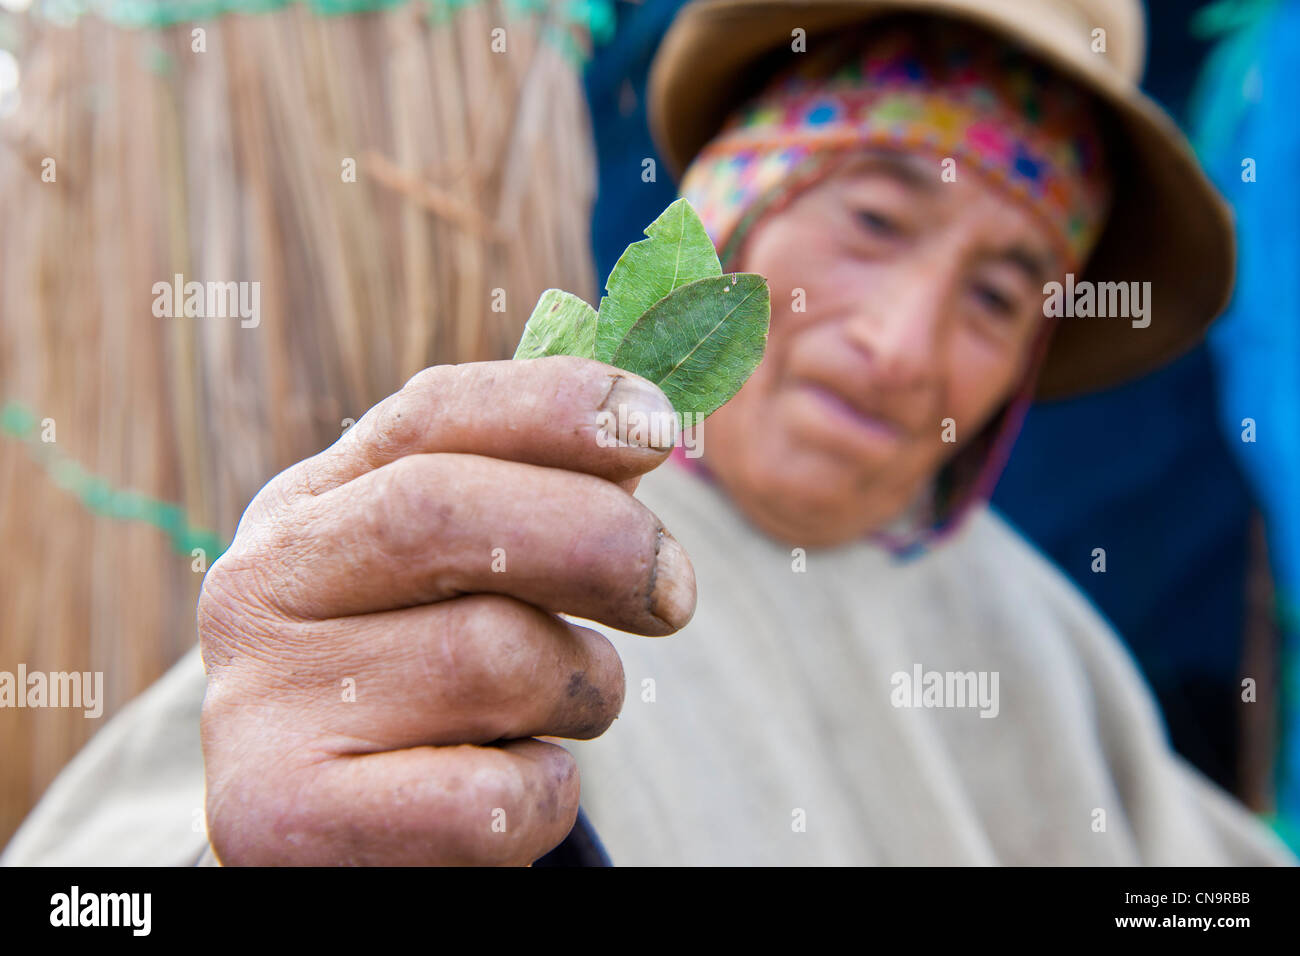 Peru, Cuzco province, Huasao, listed as mystic touristic village, shaman (curandero) exhibiting coca leaves Stock Photo